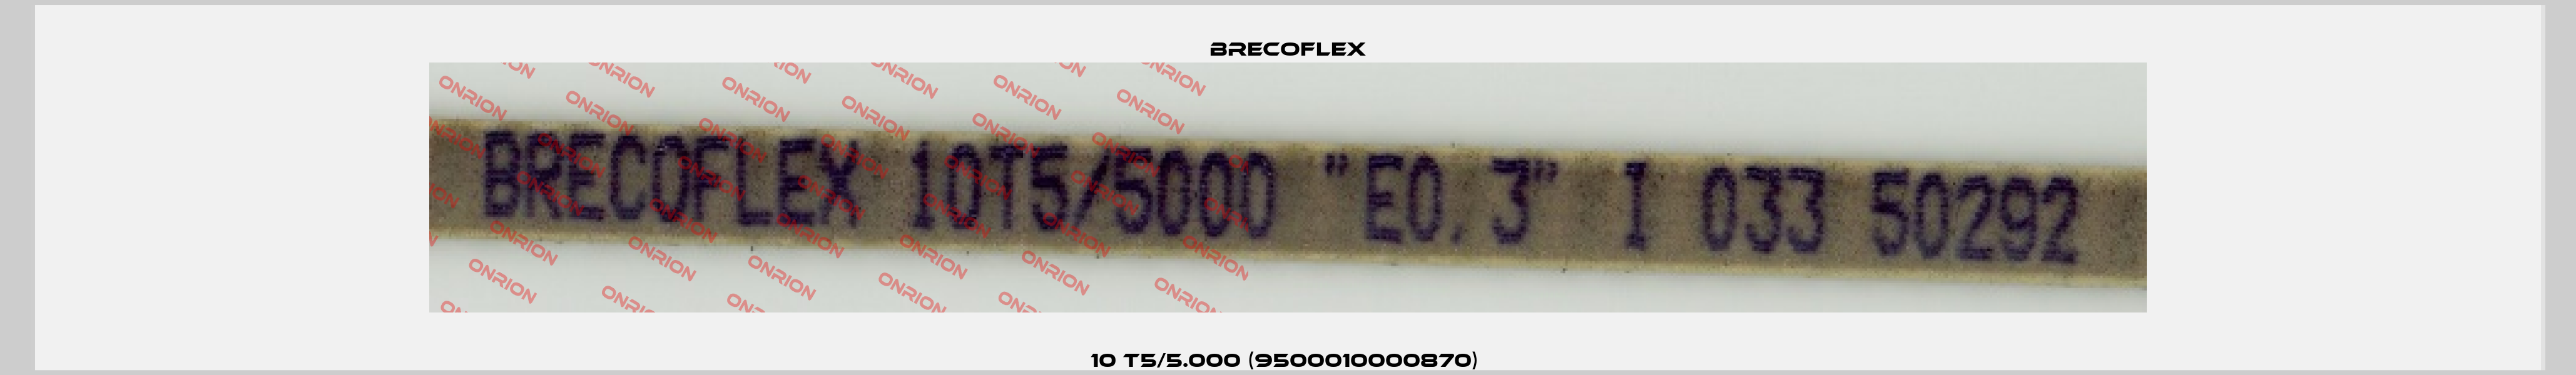 10 T5/5.000 (9500010000870)  Brecoflex